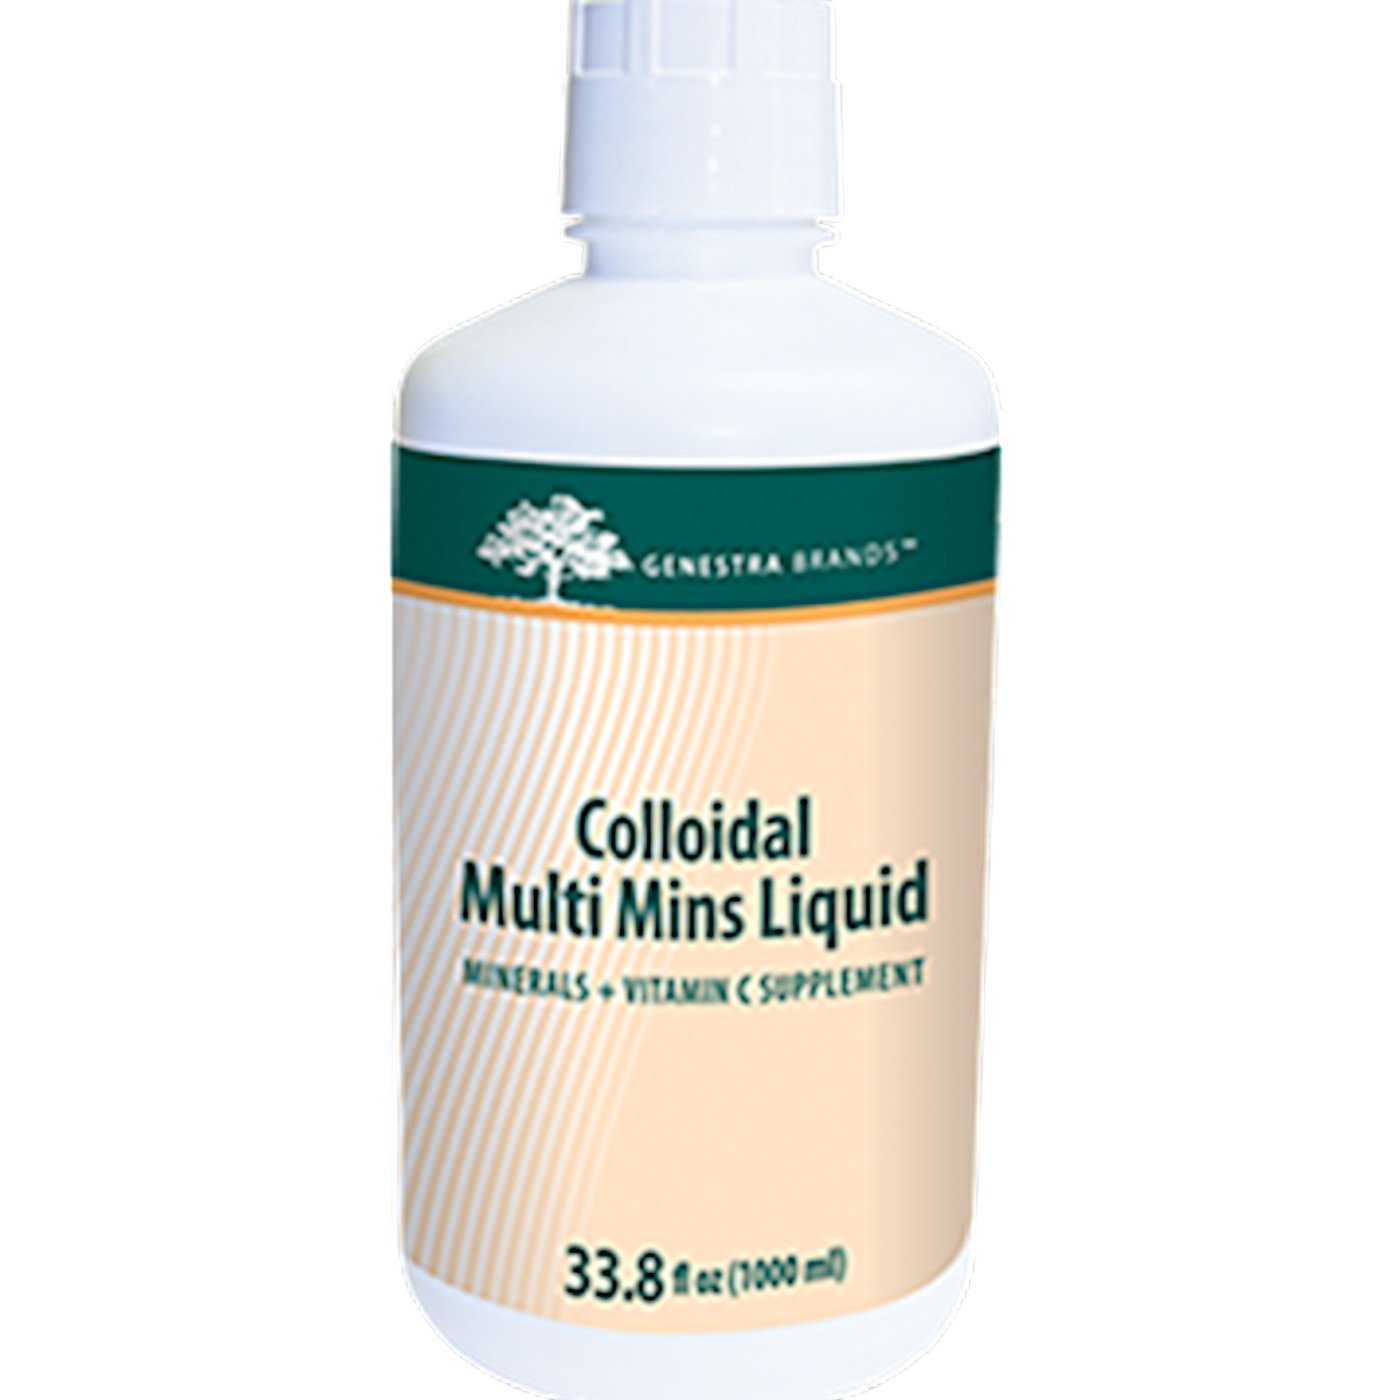 Colloidal Multi Mins Liquid 33.8 oz Curated Wellness